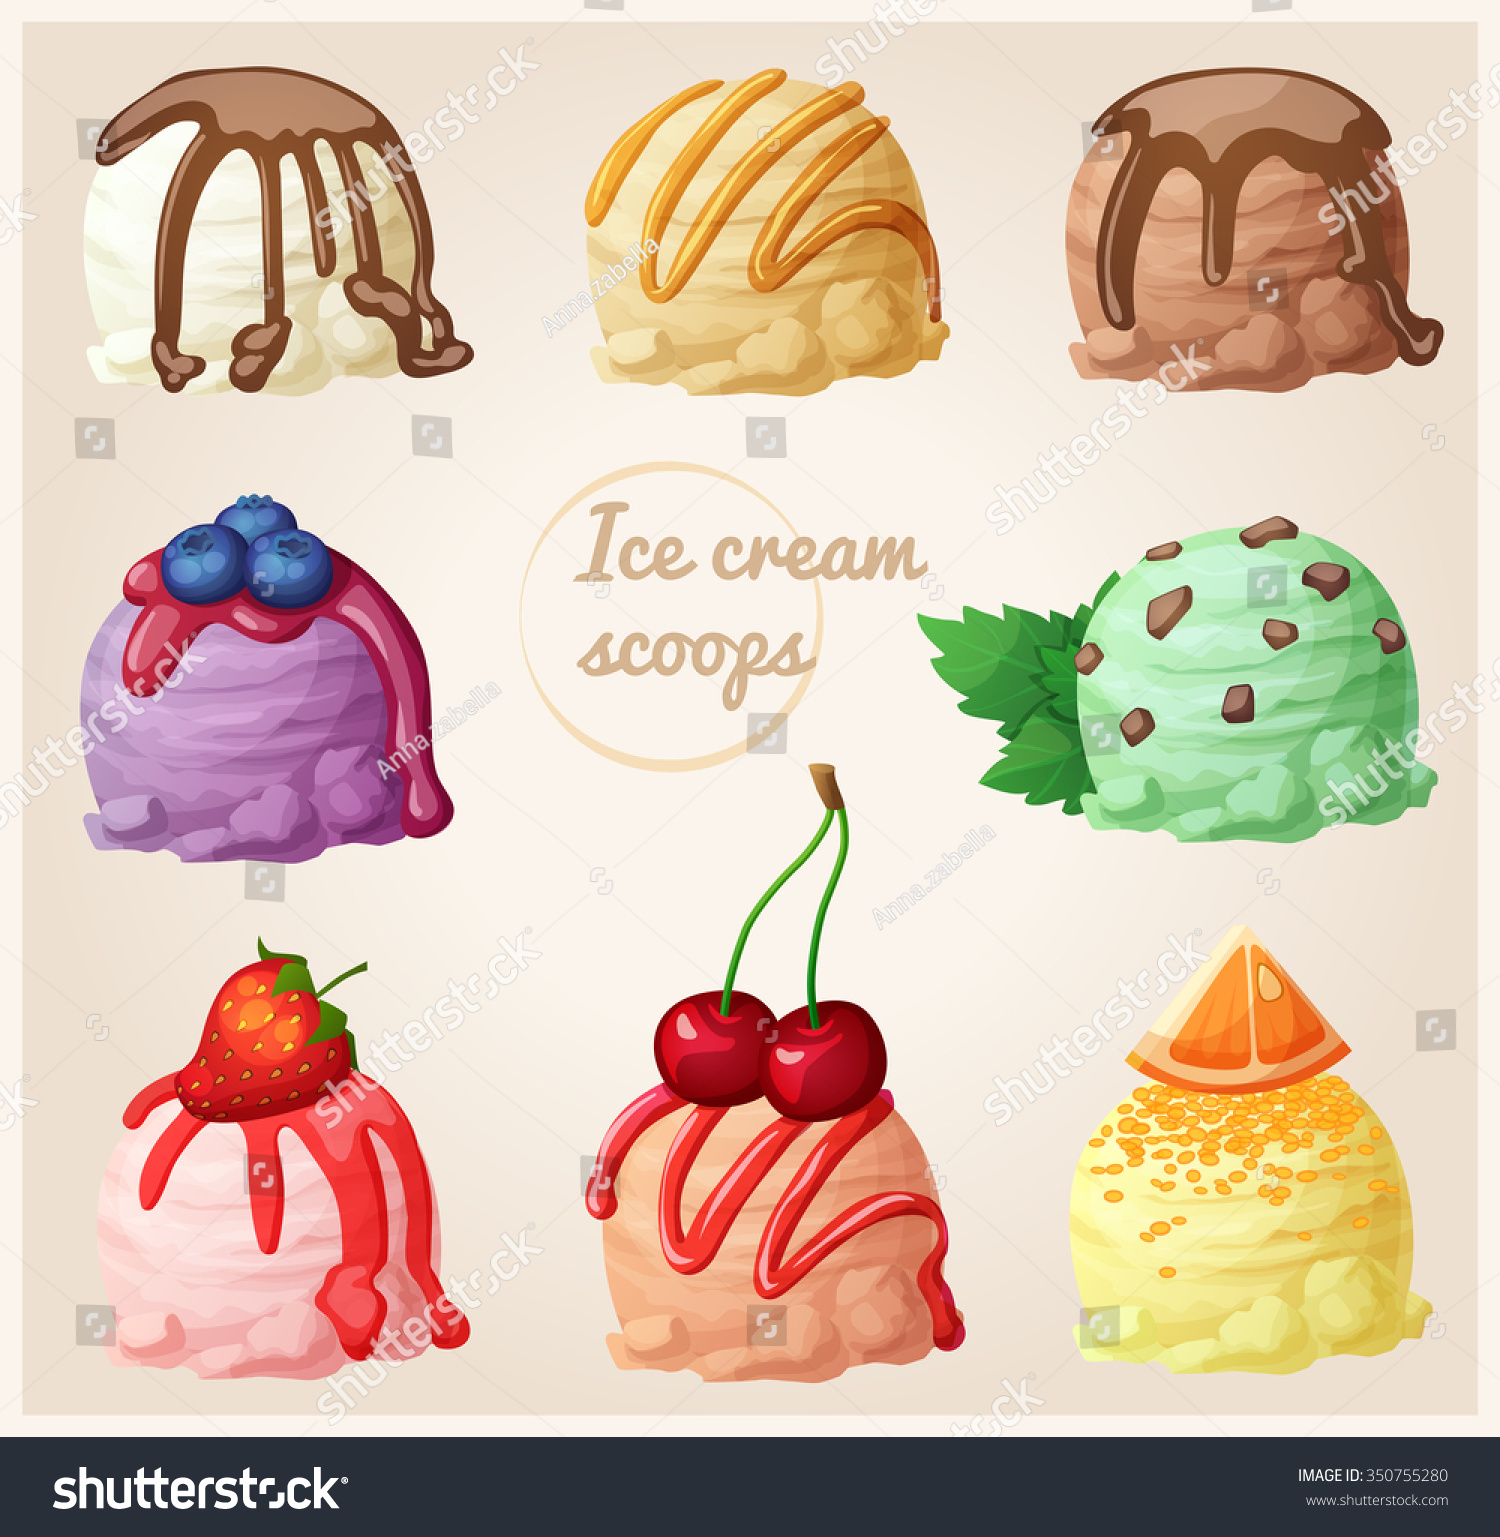 ice cream flavors clipart - photo #50